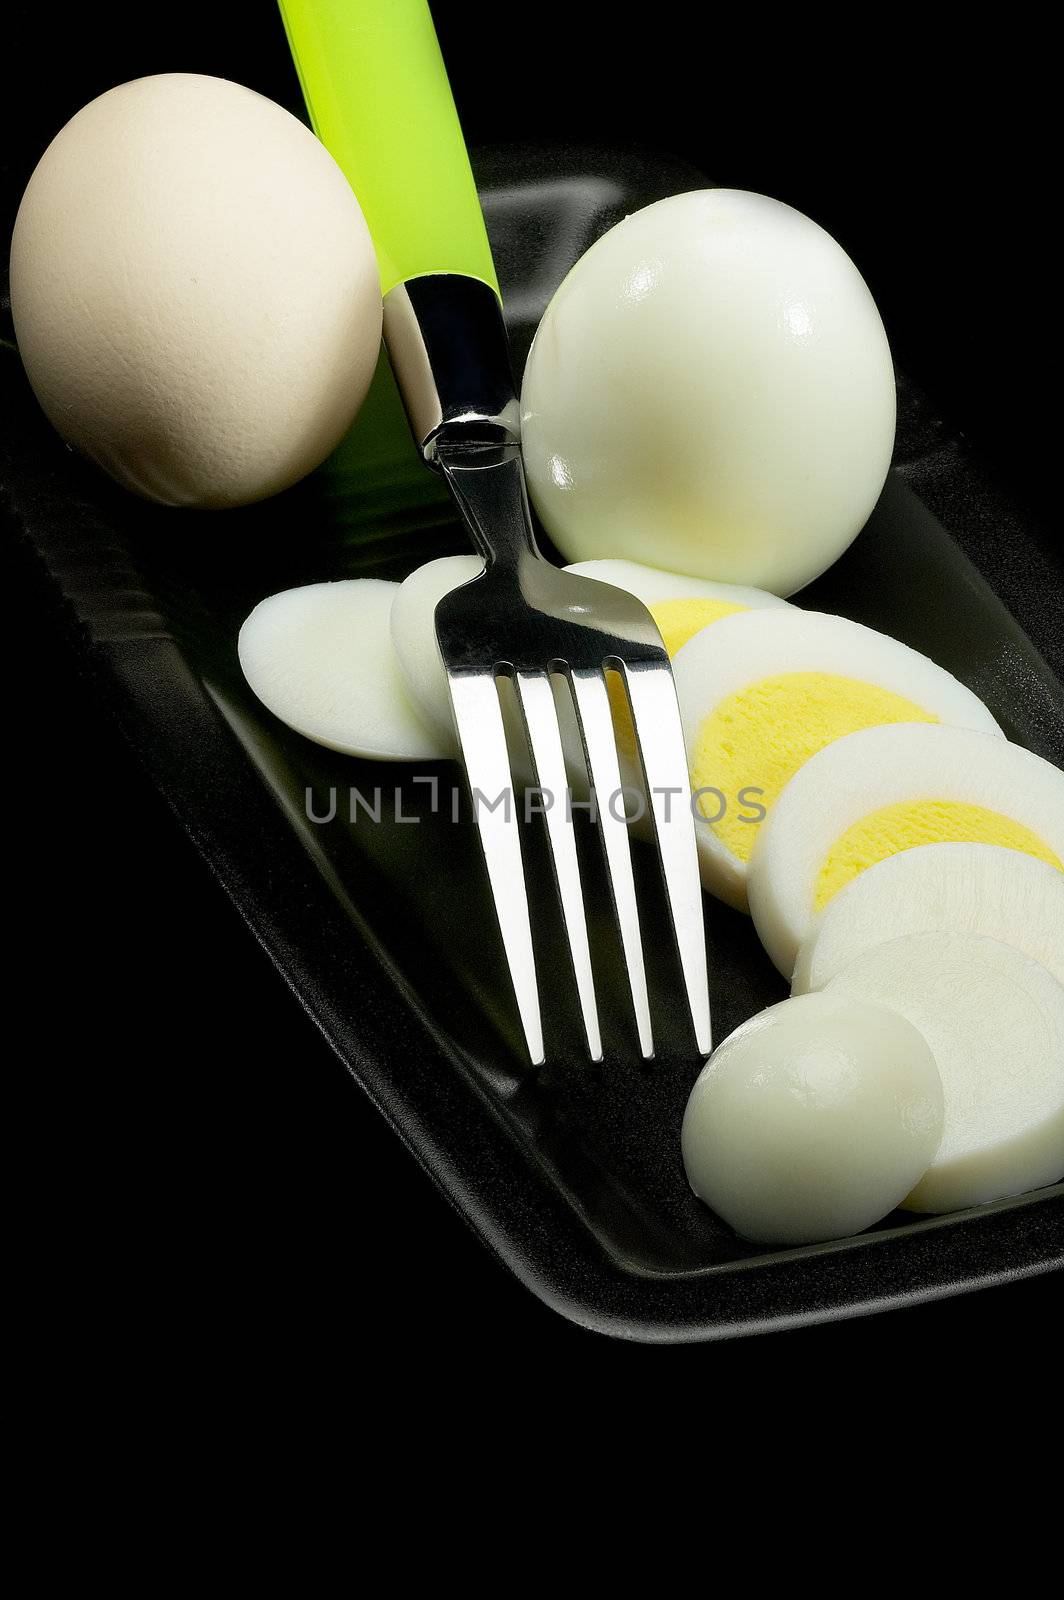 boiled eggs by keko64